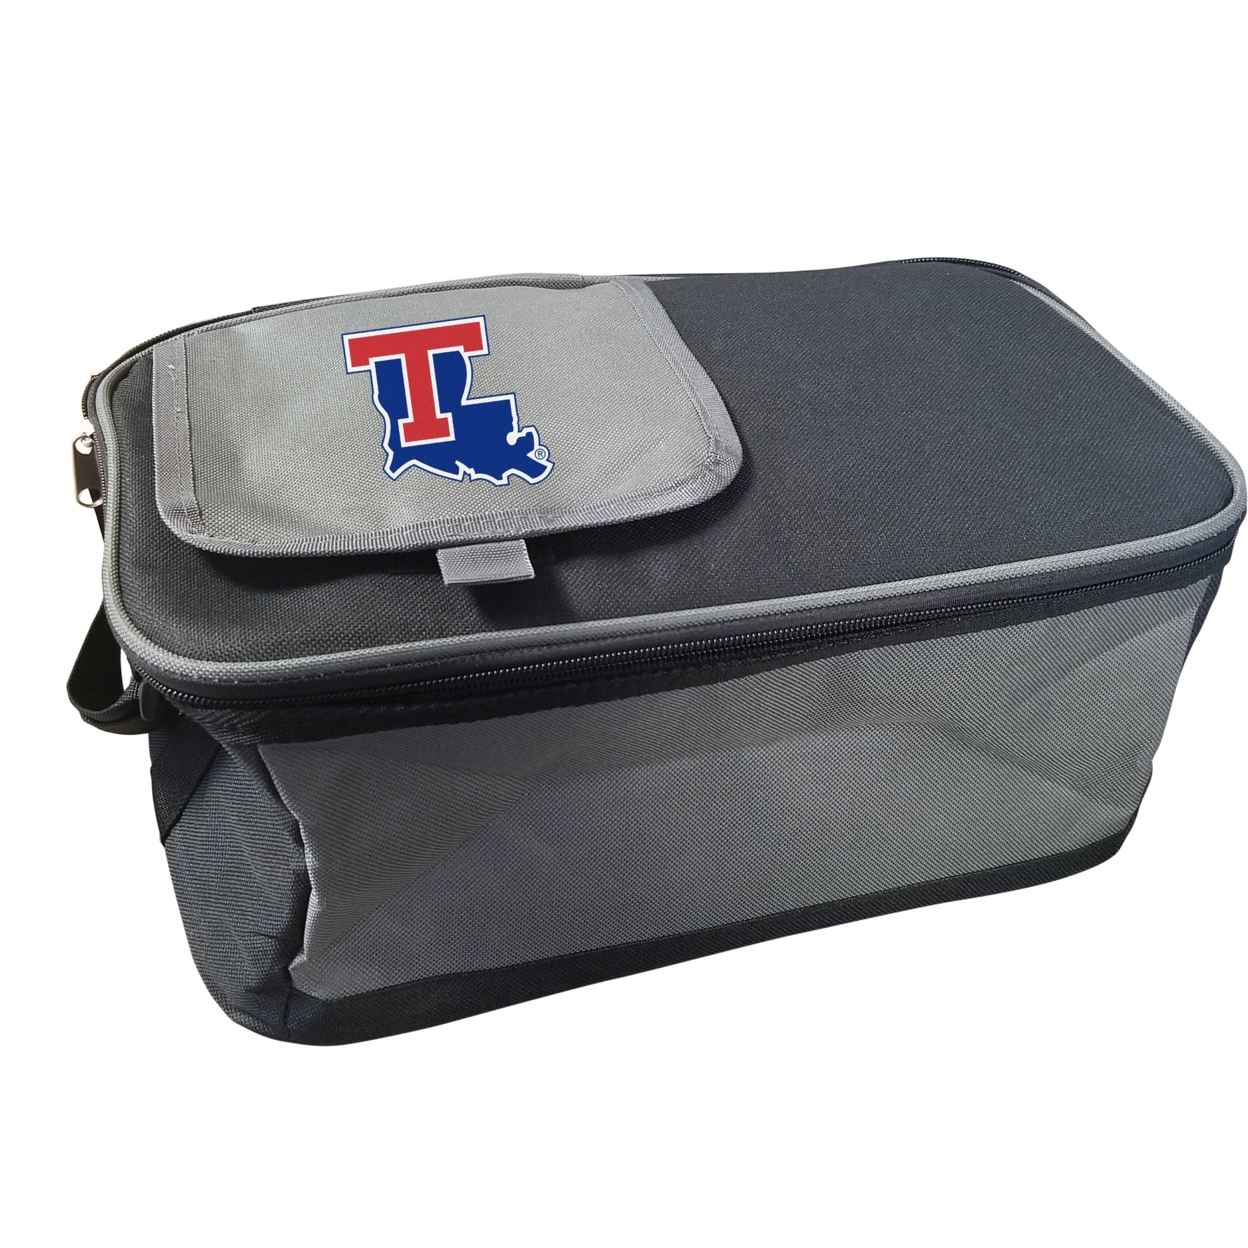 Louisiana Tech Bulldogs 9 Pack Cooler